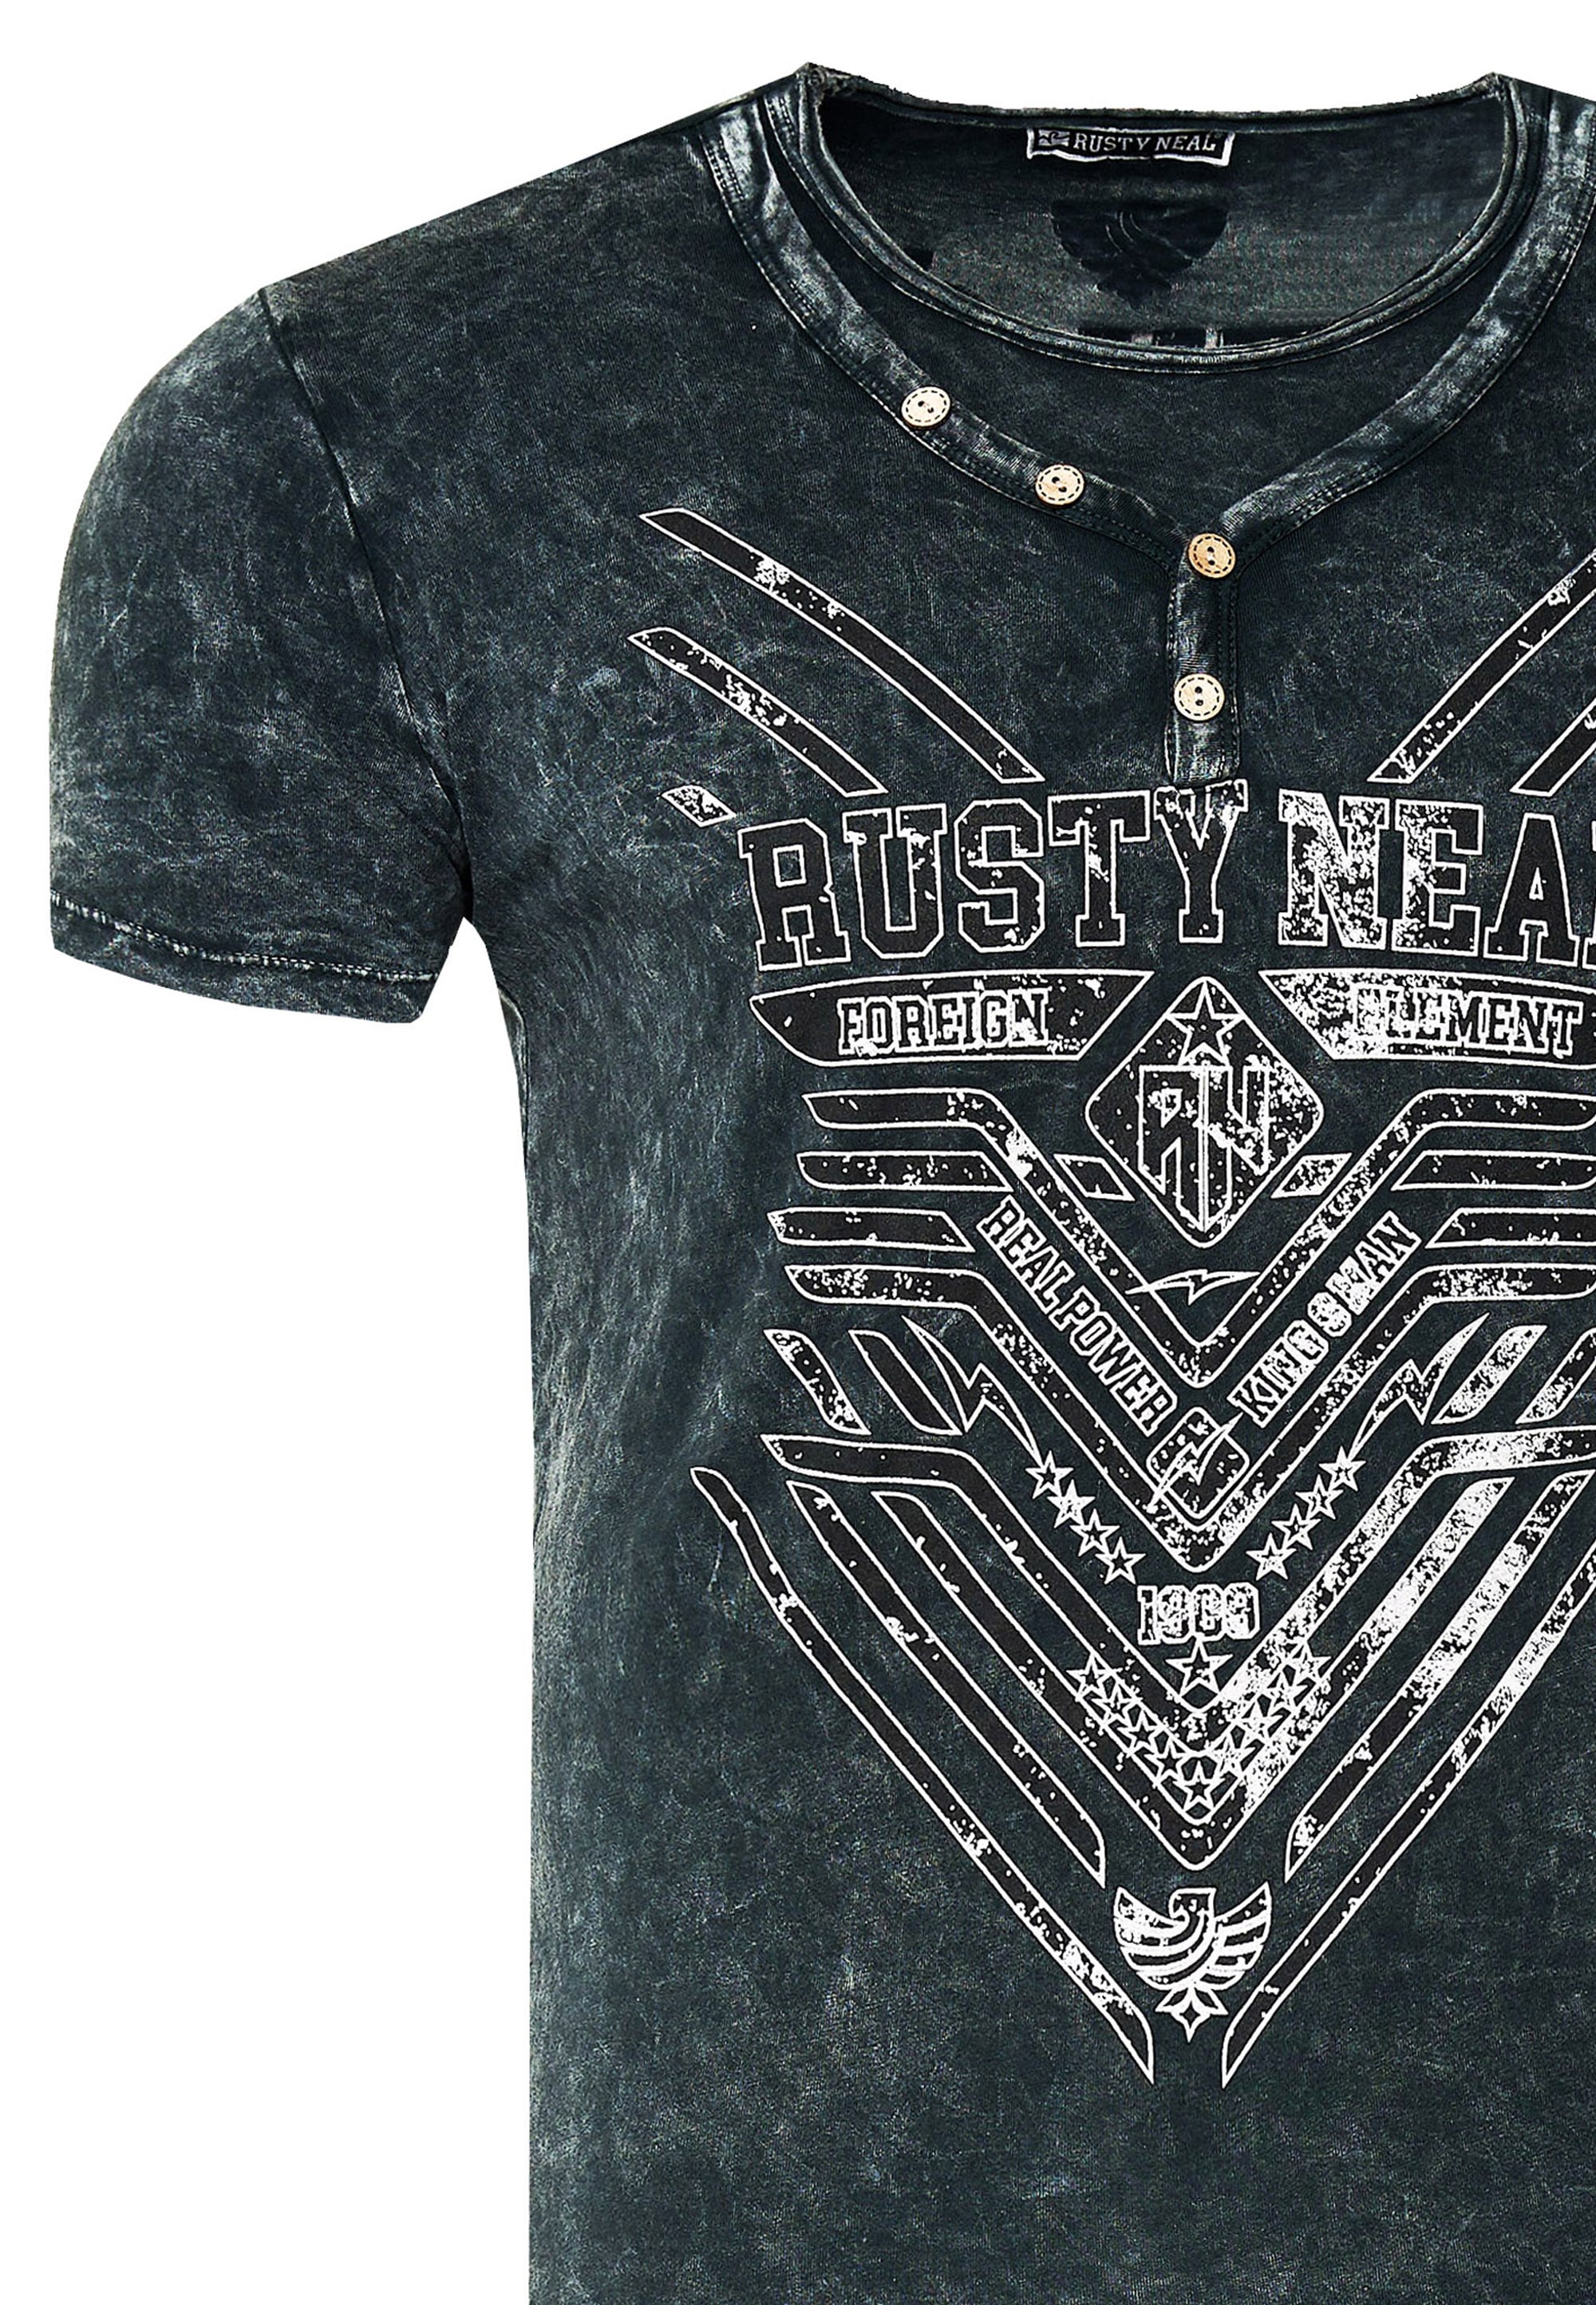 Black Friday Rusty BAUR Neal mit T-Shirt, Print stylischem 